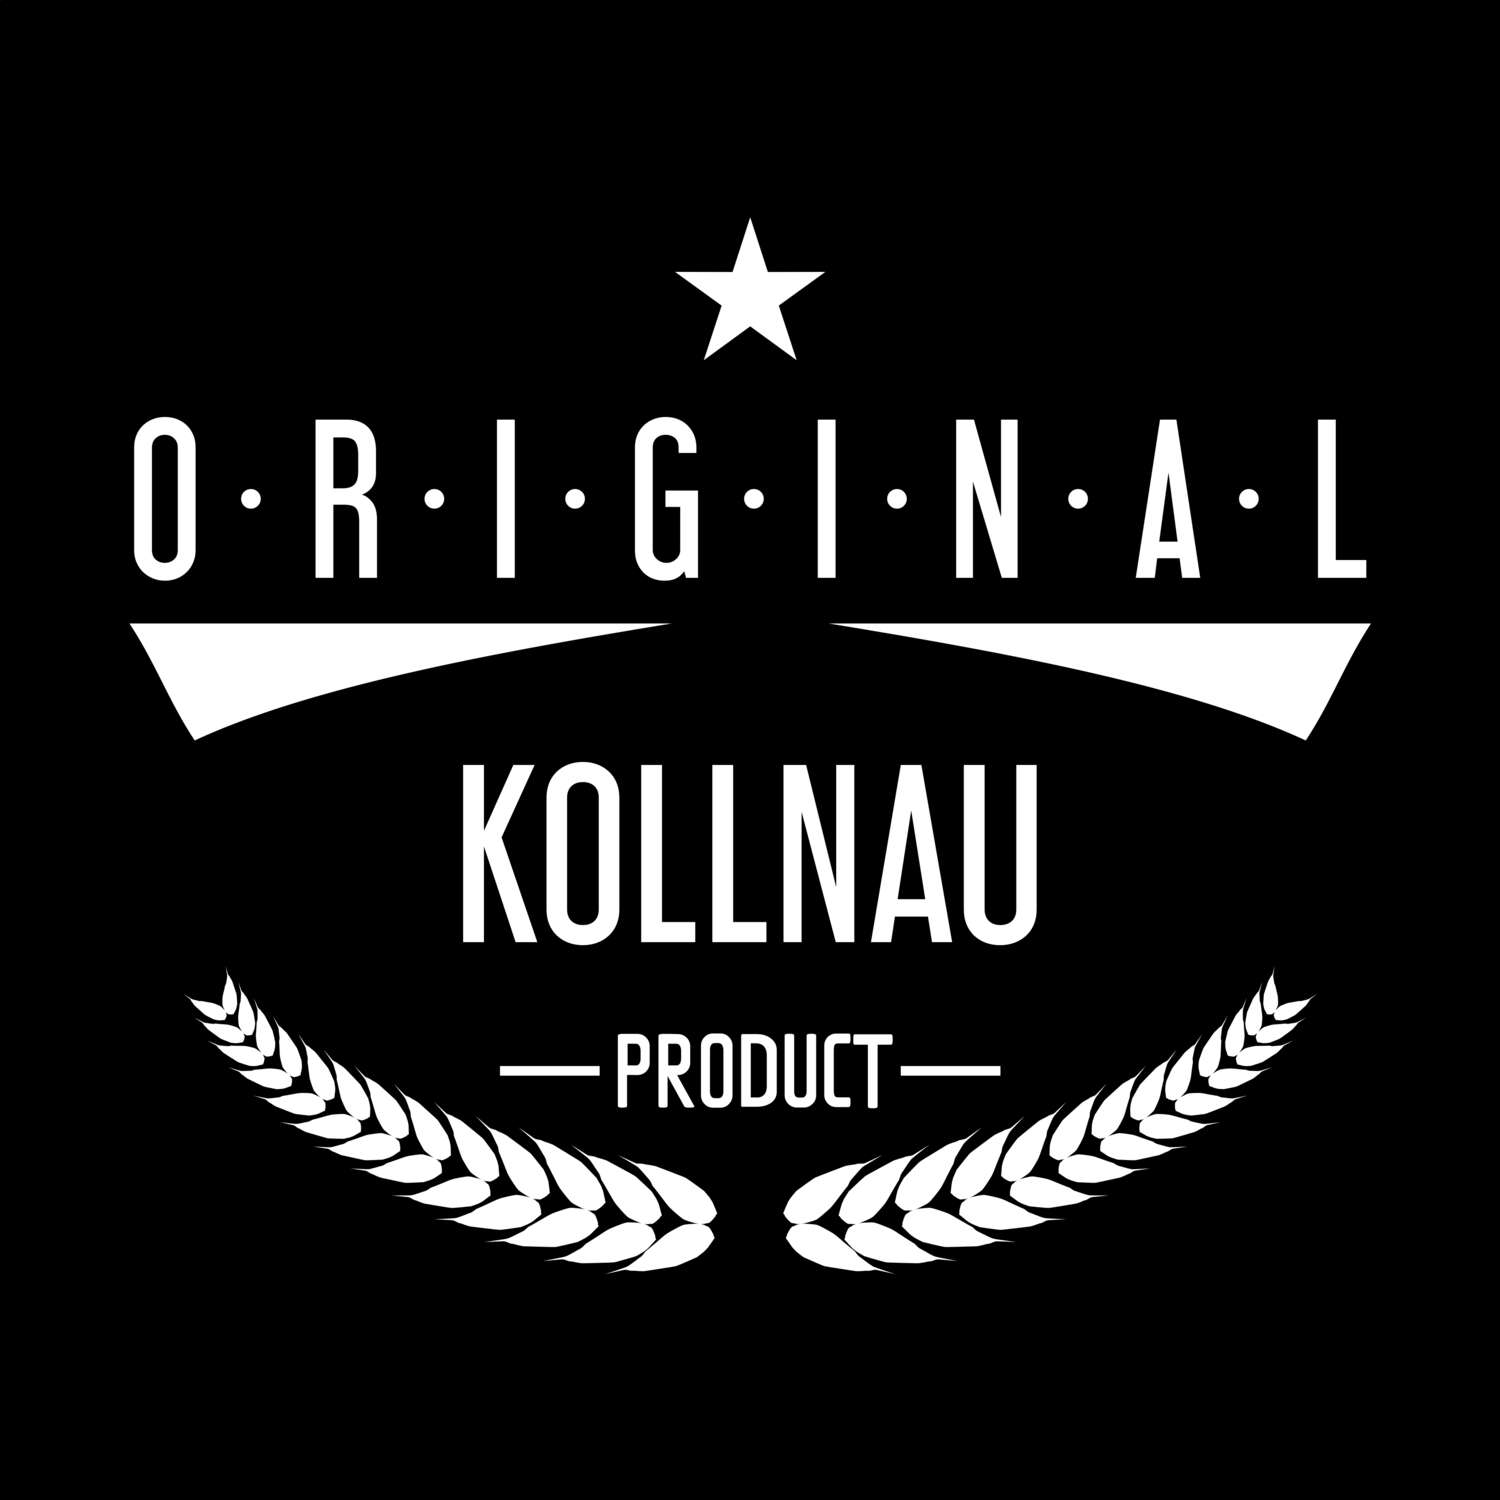 Kollnau T-Shirt »Original Product«